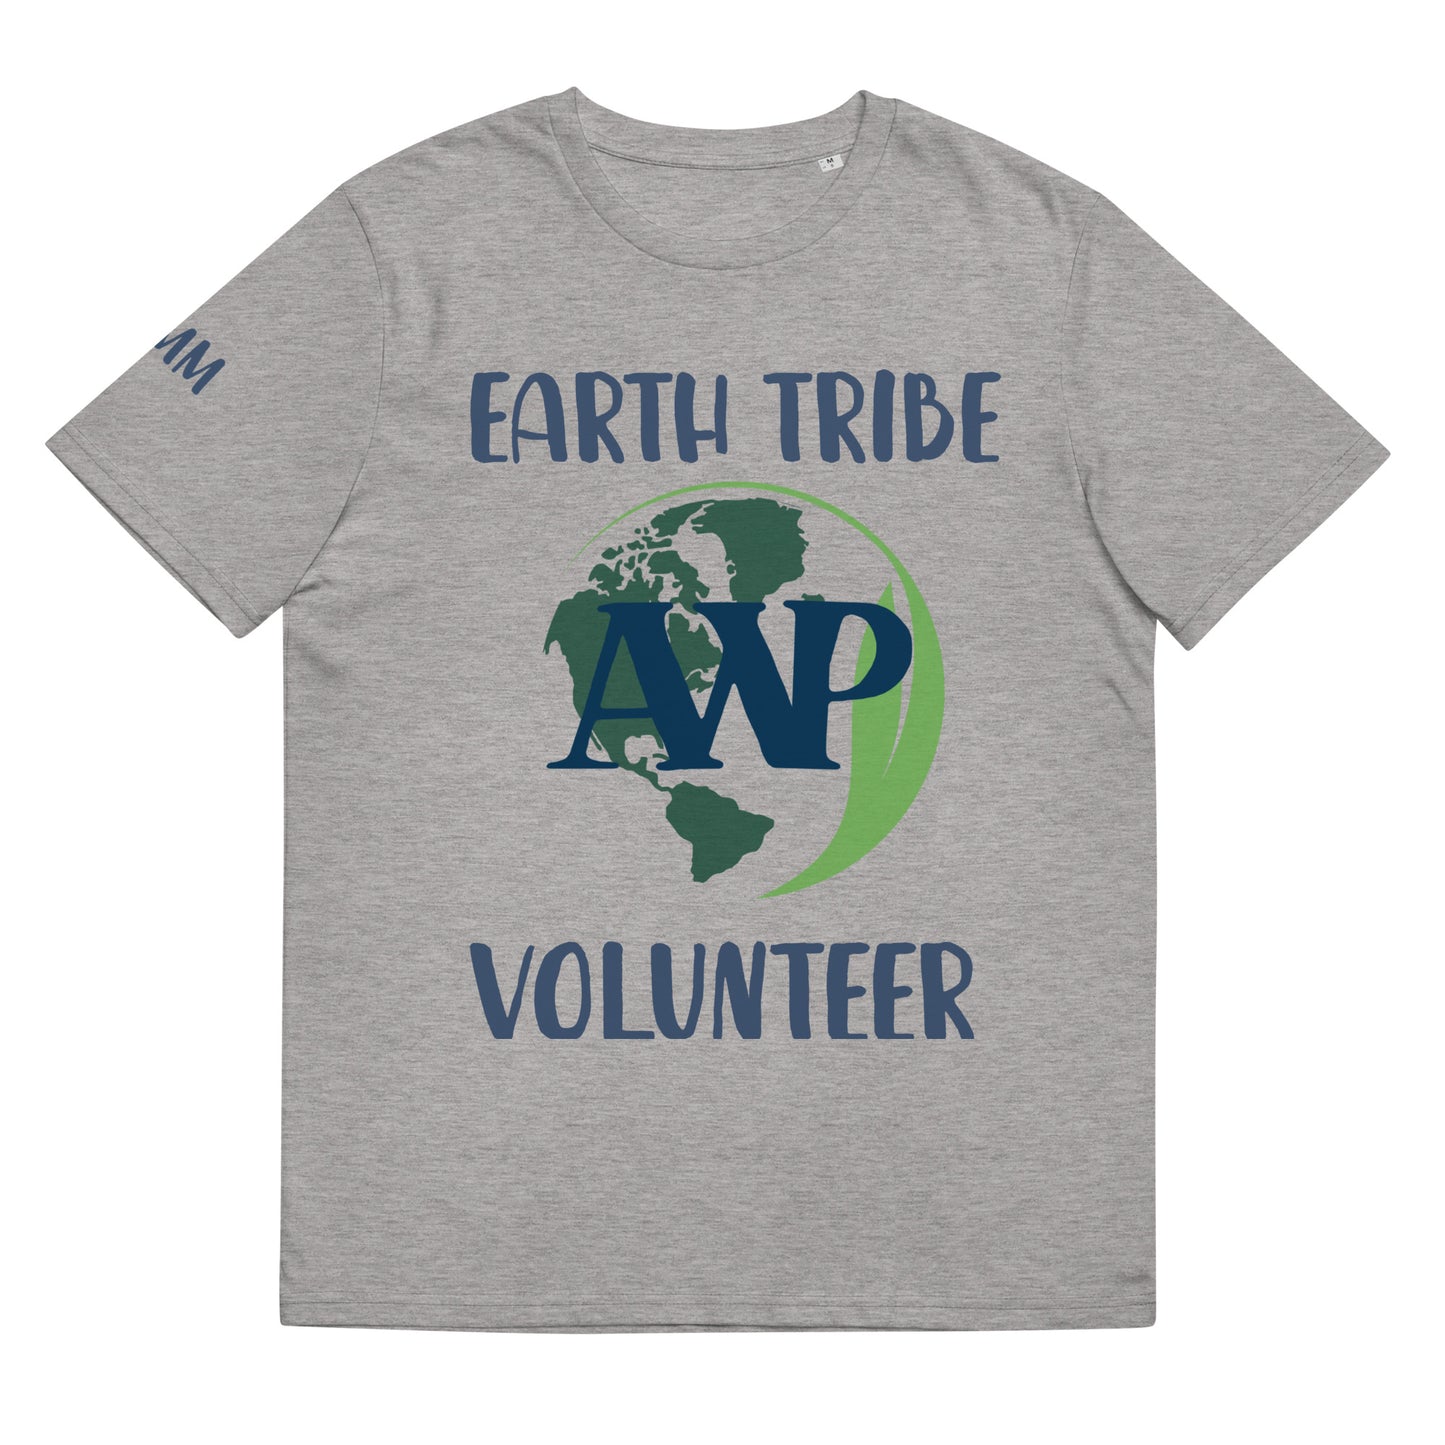 FREE After Becoming AWP's Volunteer! Organic Earth Tribe Volunteer T-Shirt